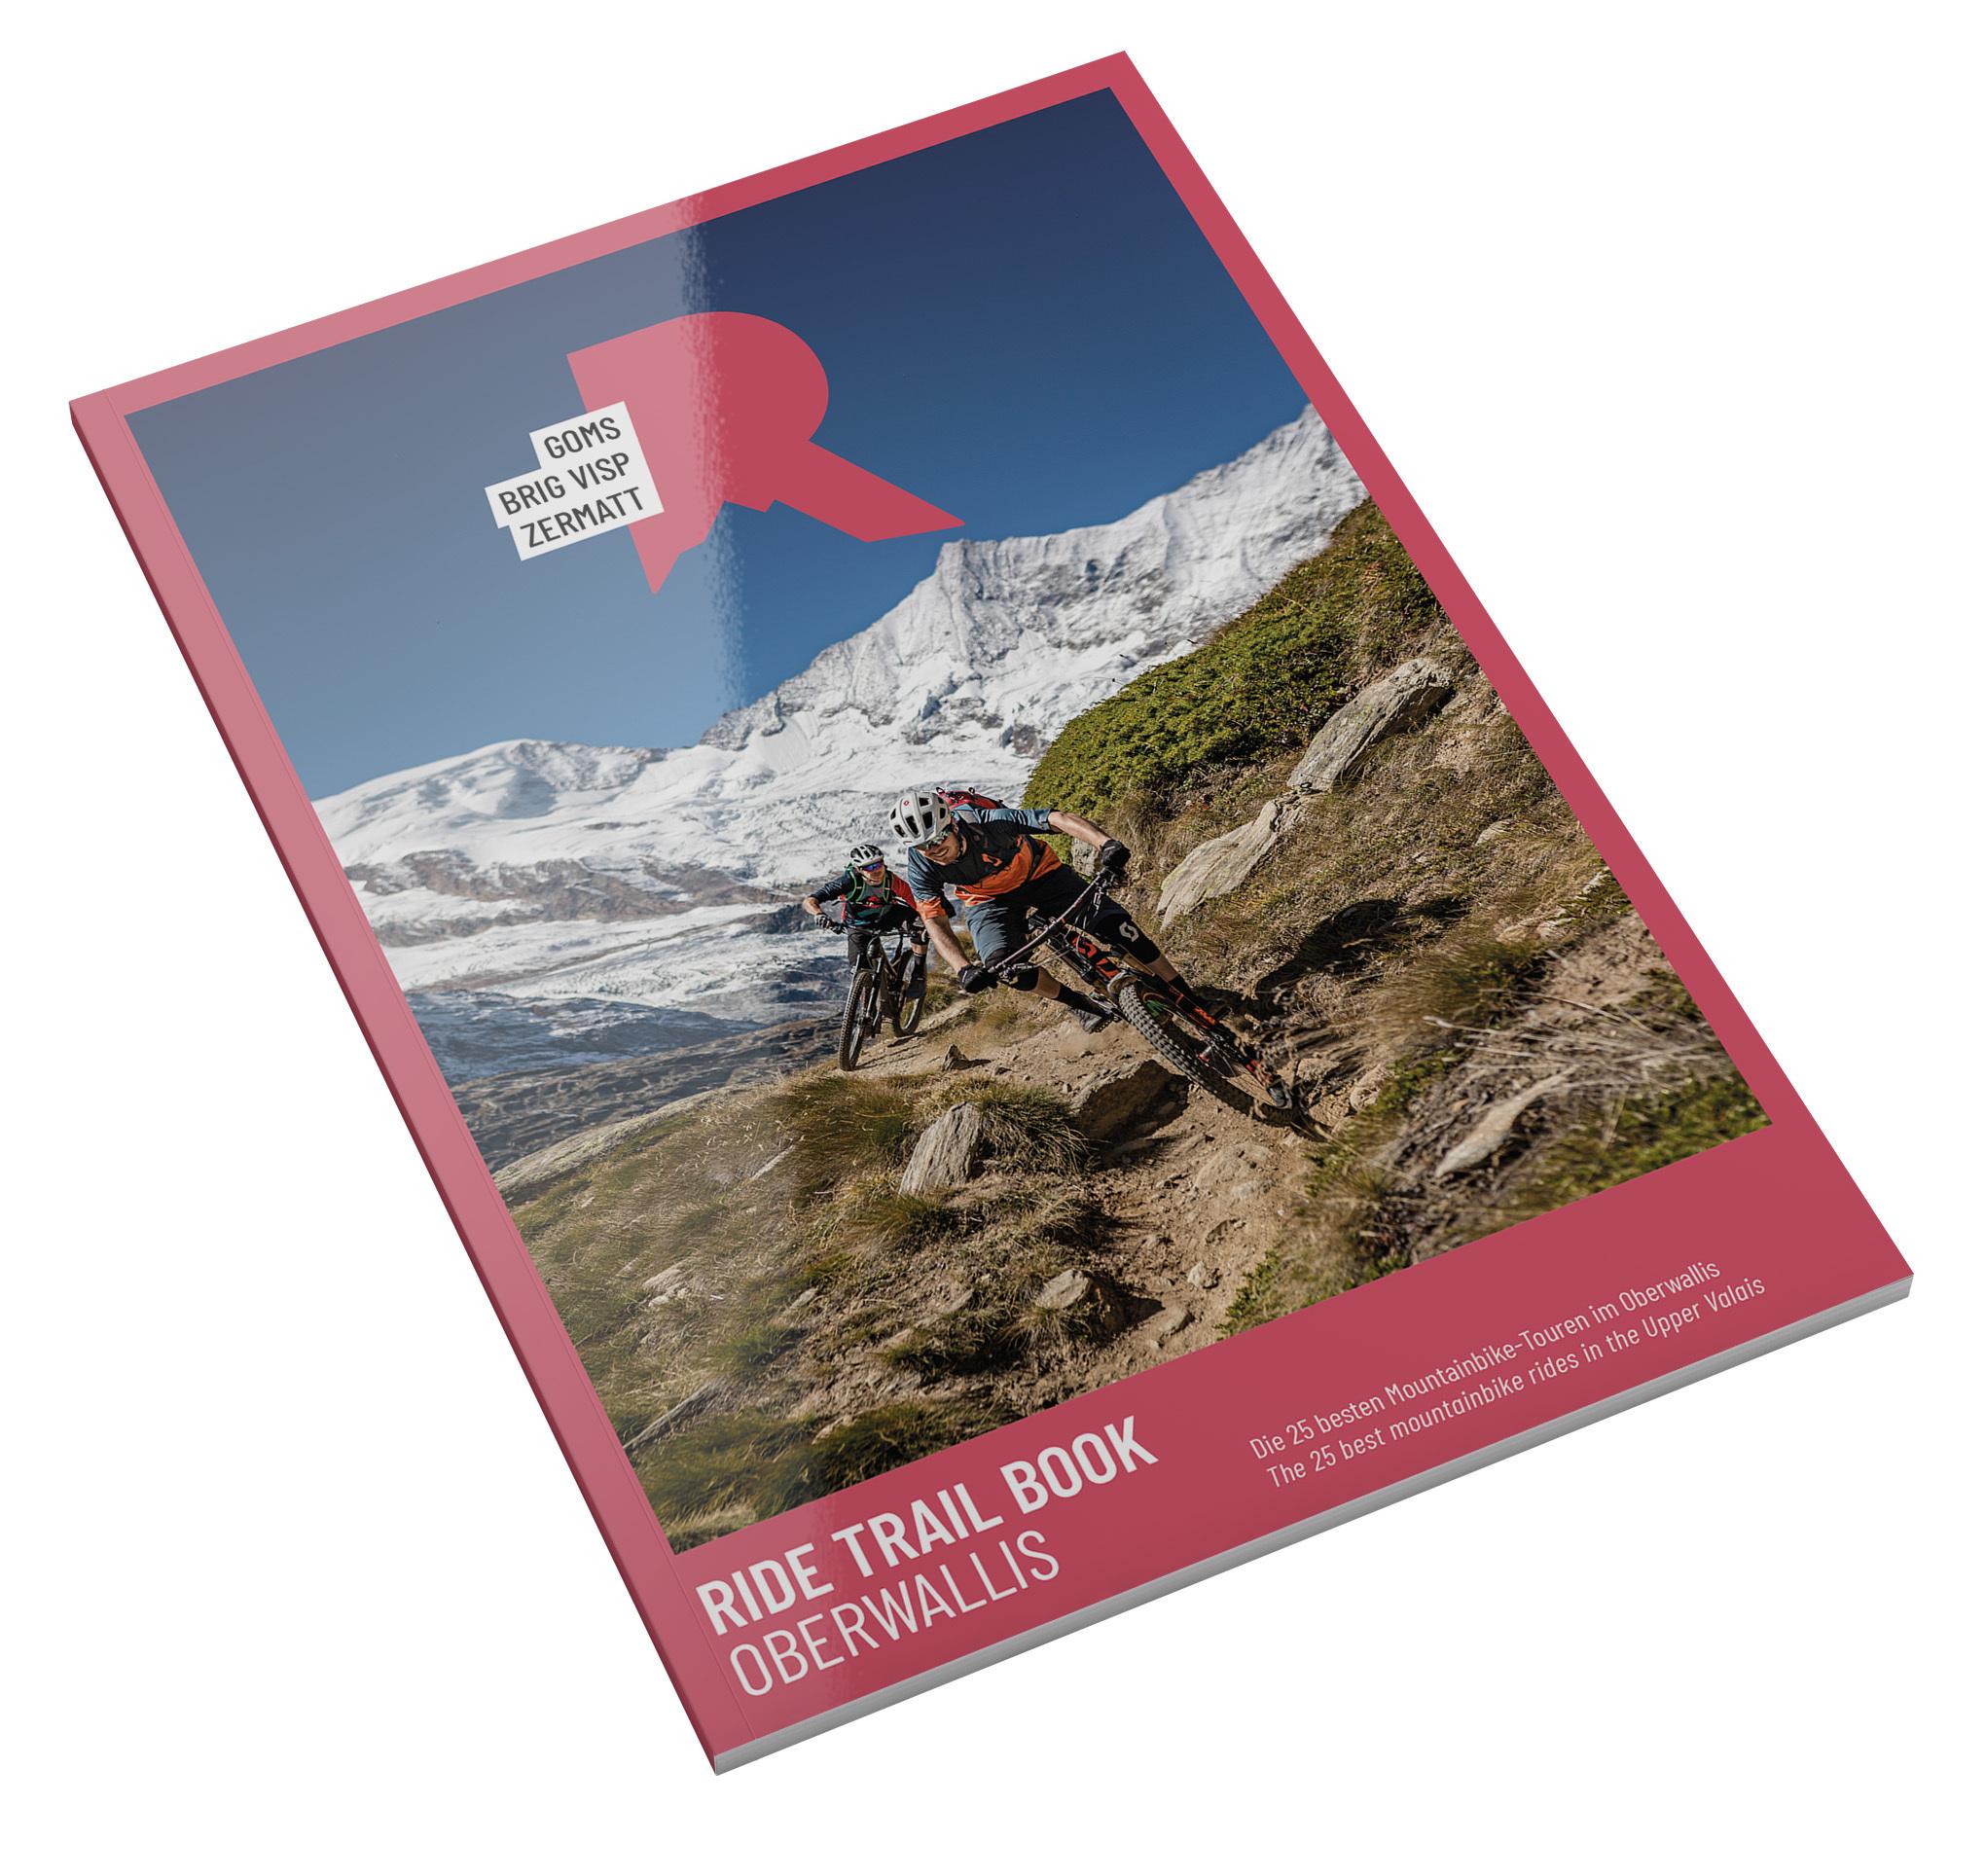 Ride Trail Book Oberwallis_Cover